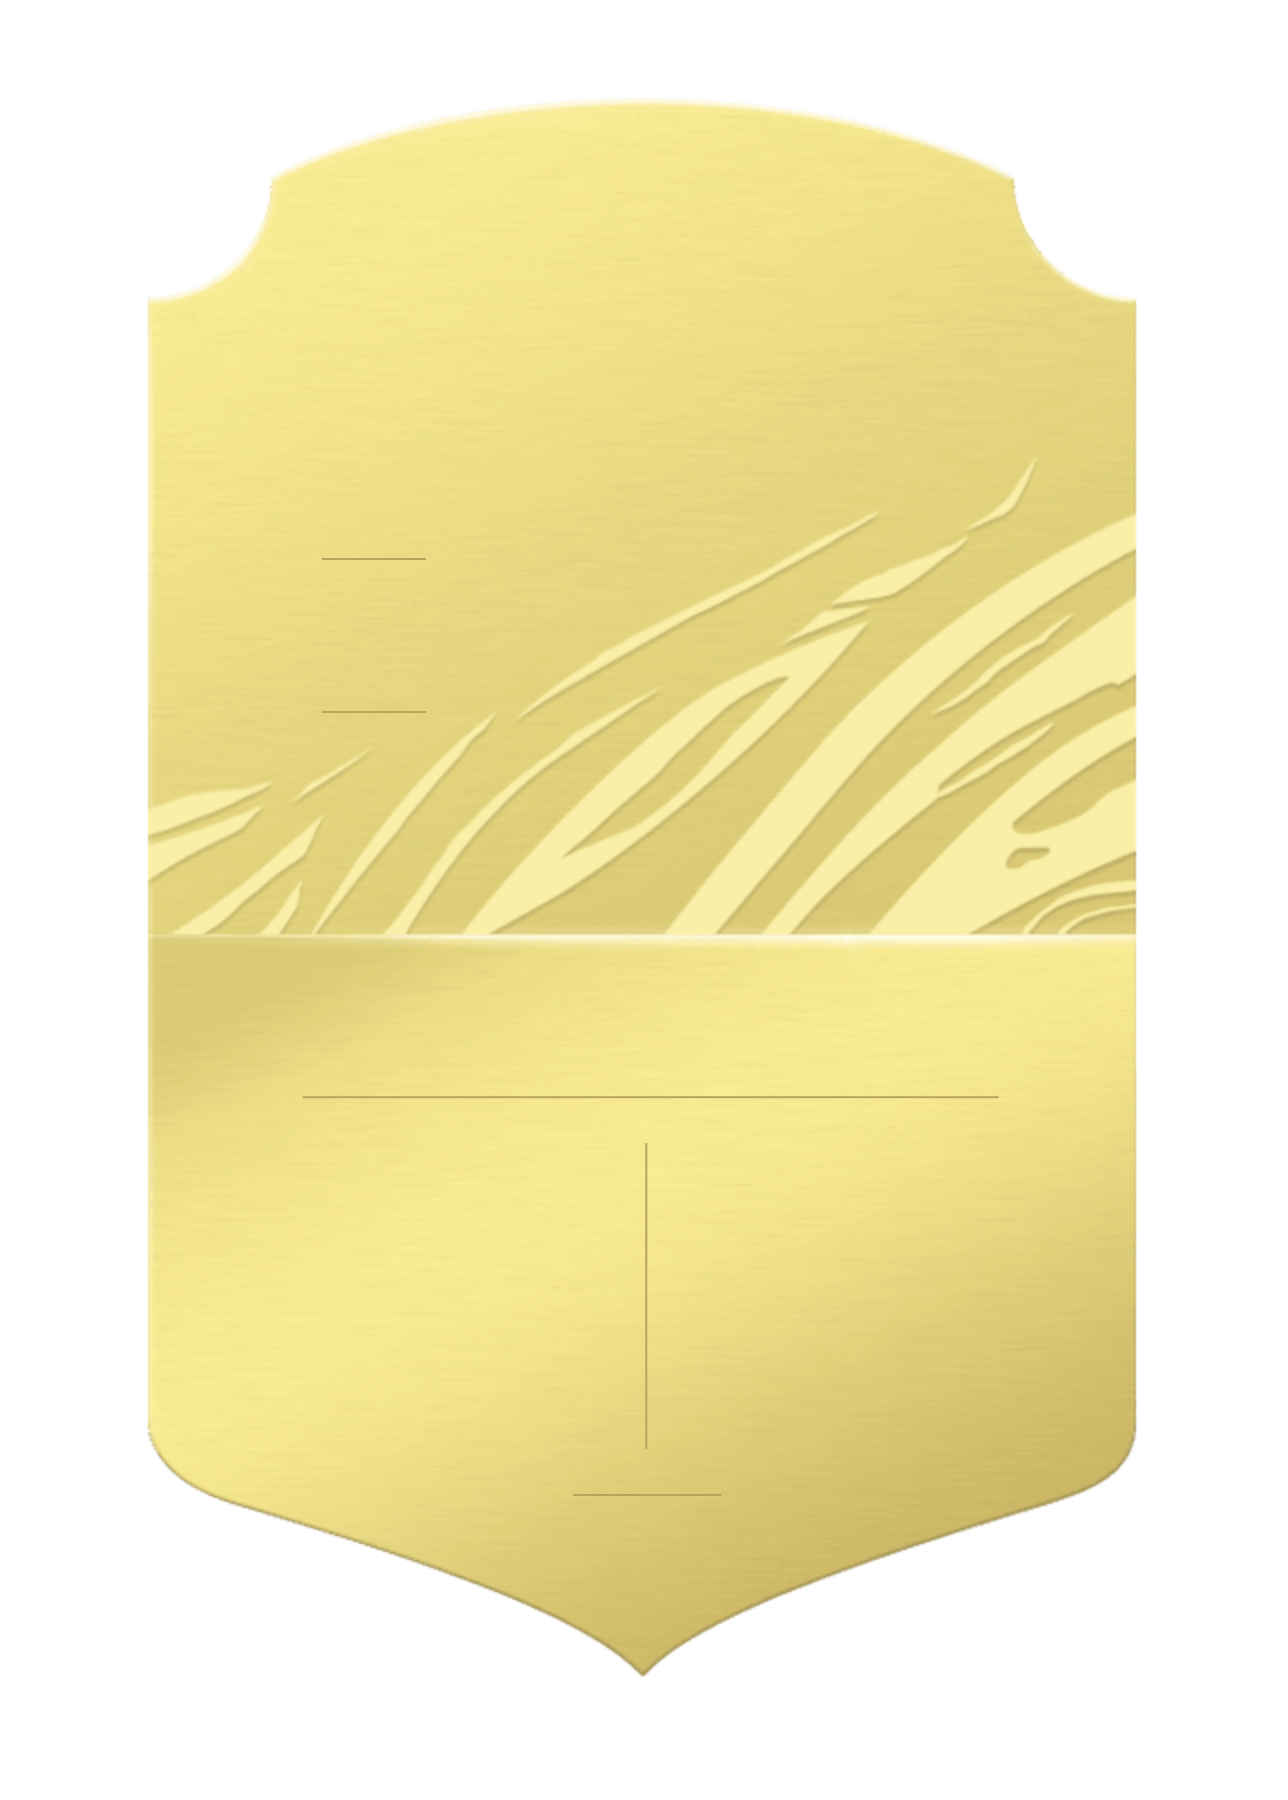 FIFA 21: official Gold card design